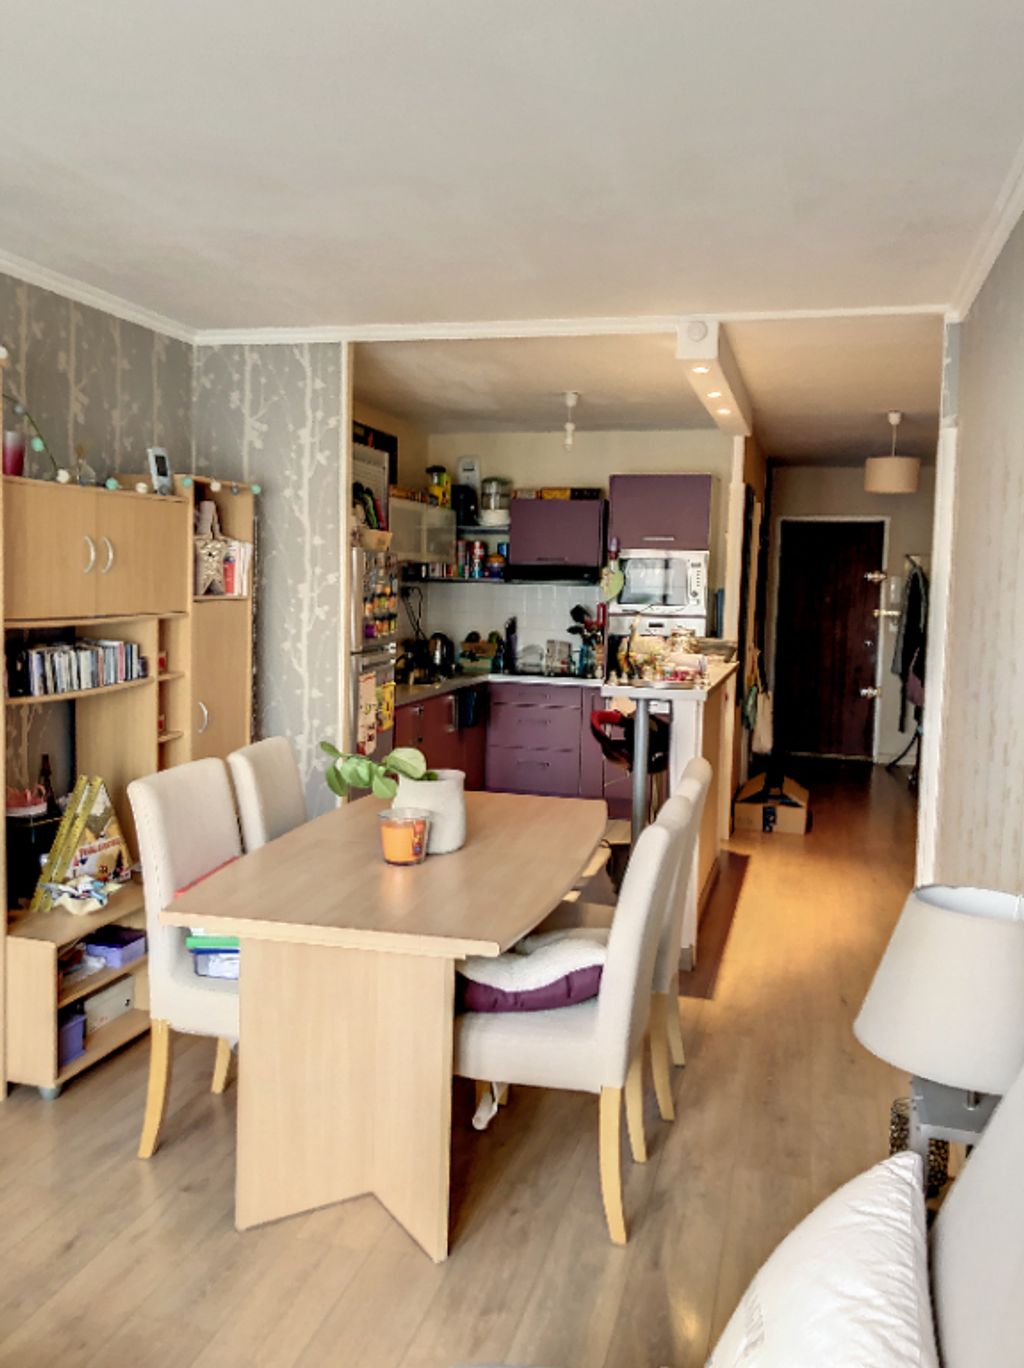 Achat appartement 2 pièces 52 m² - Angers